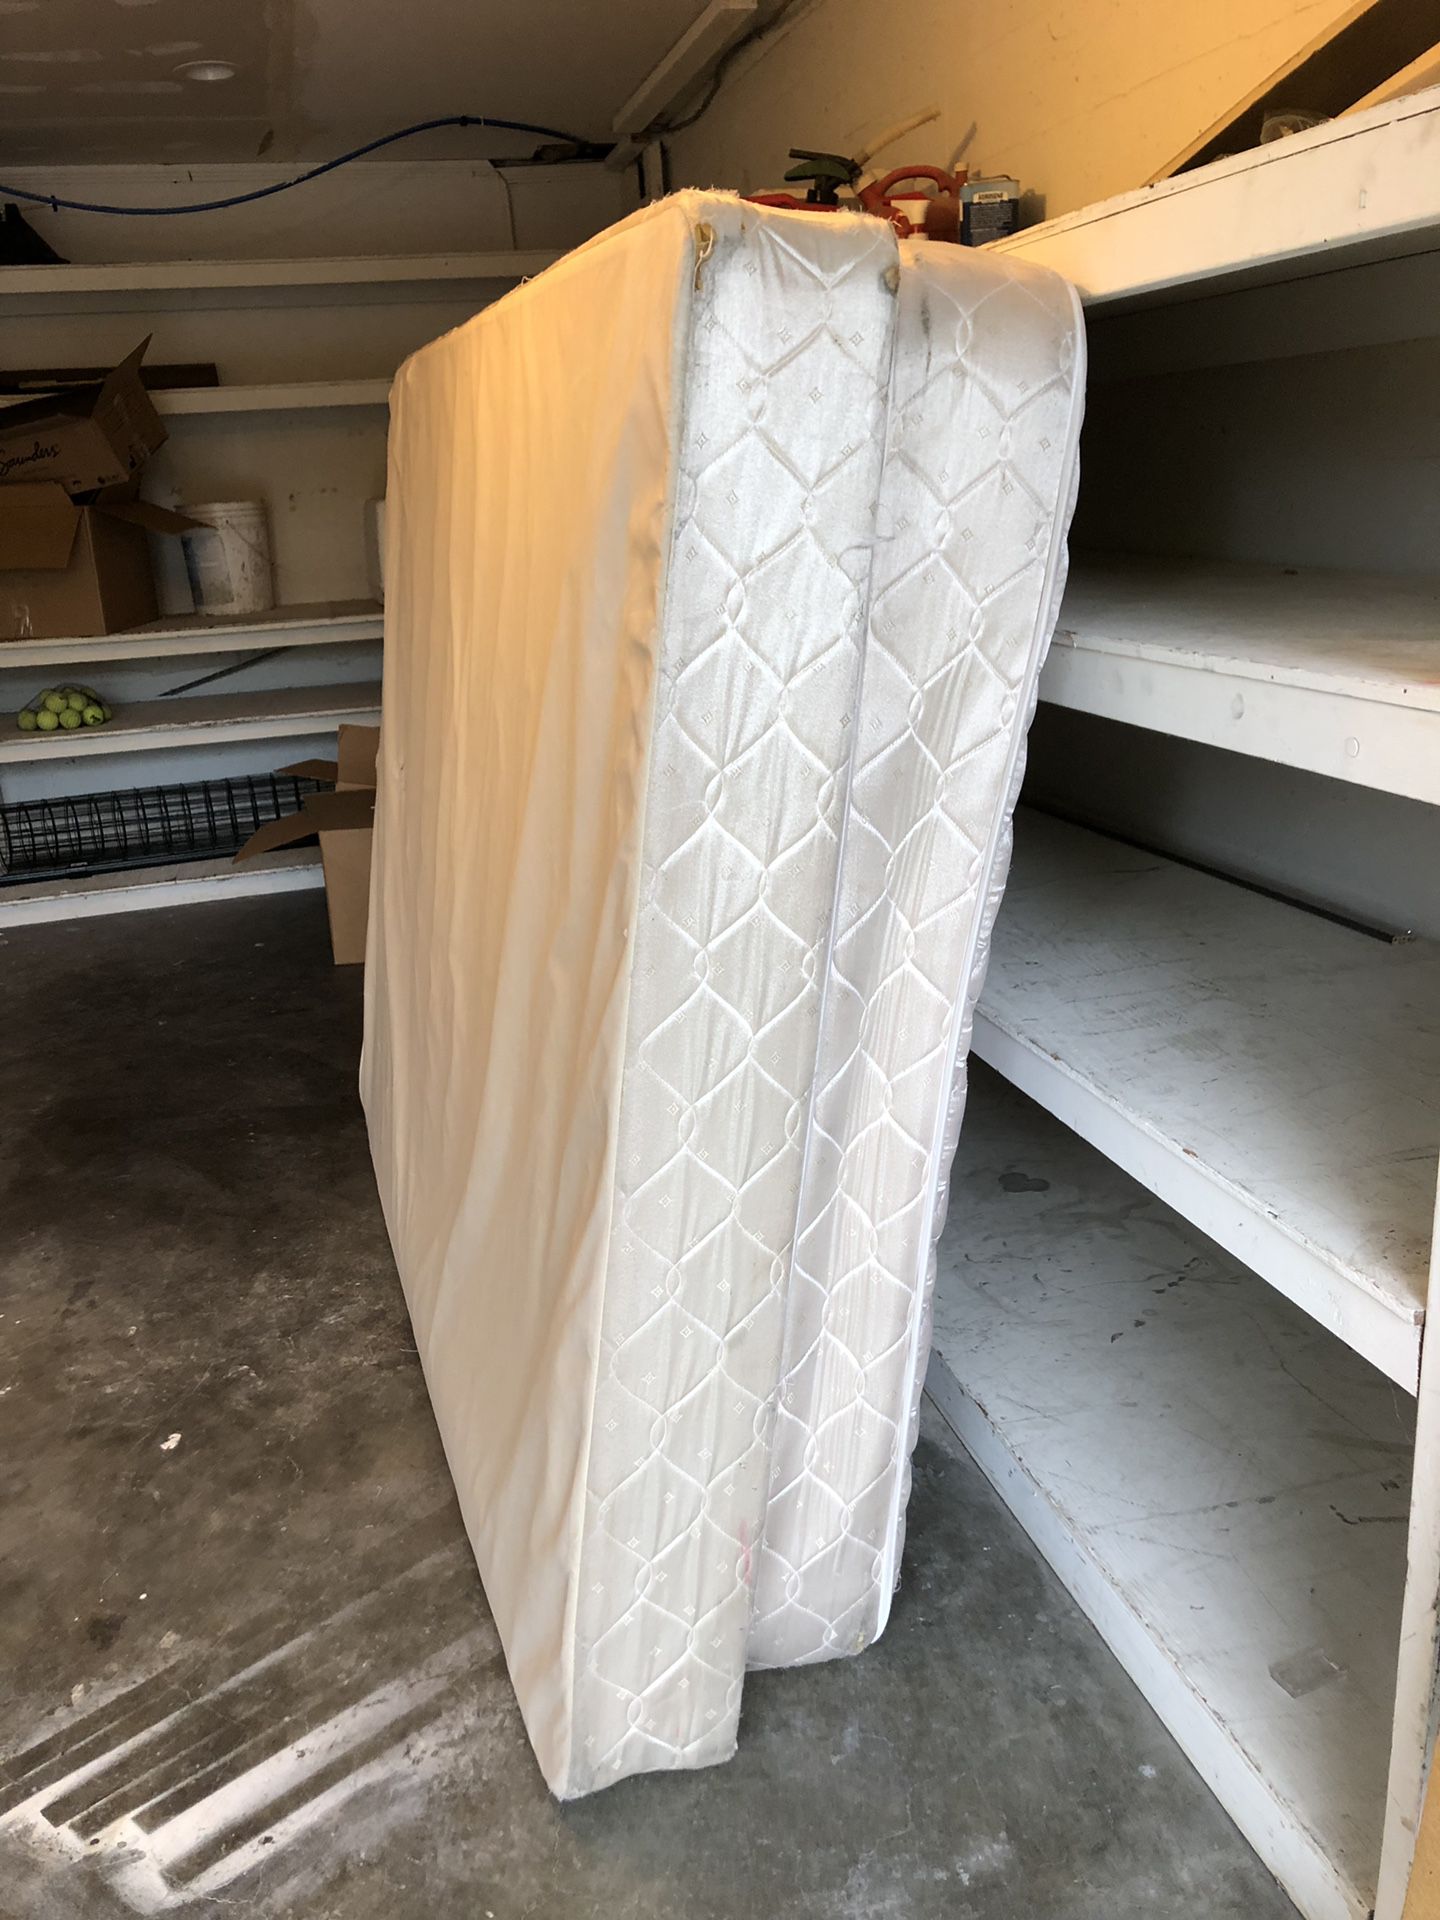 Queen sized mattress, box spring, headboard AND dresser with mirror!